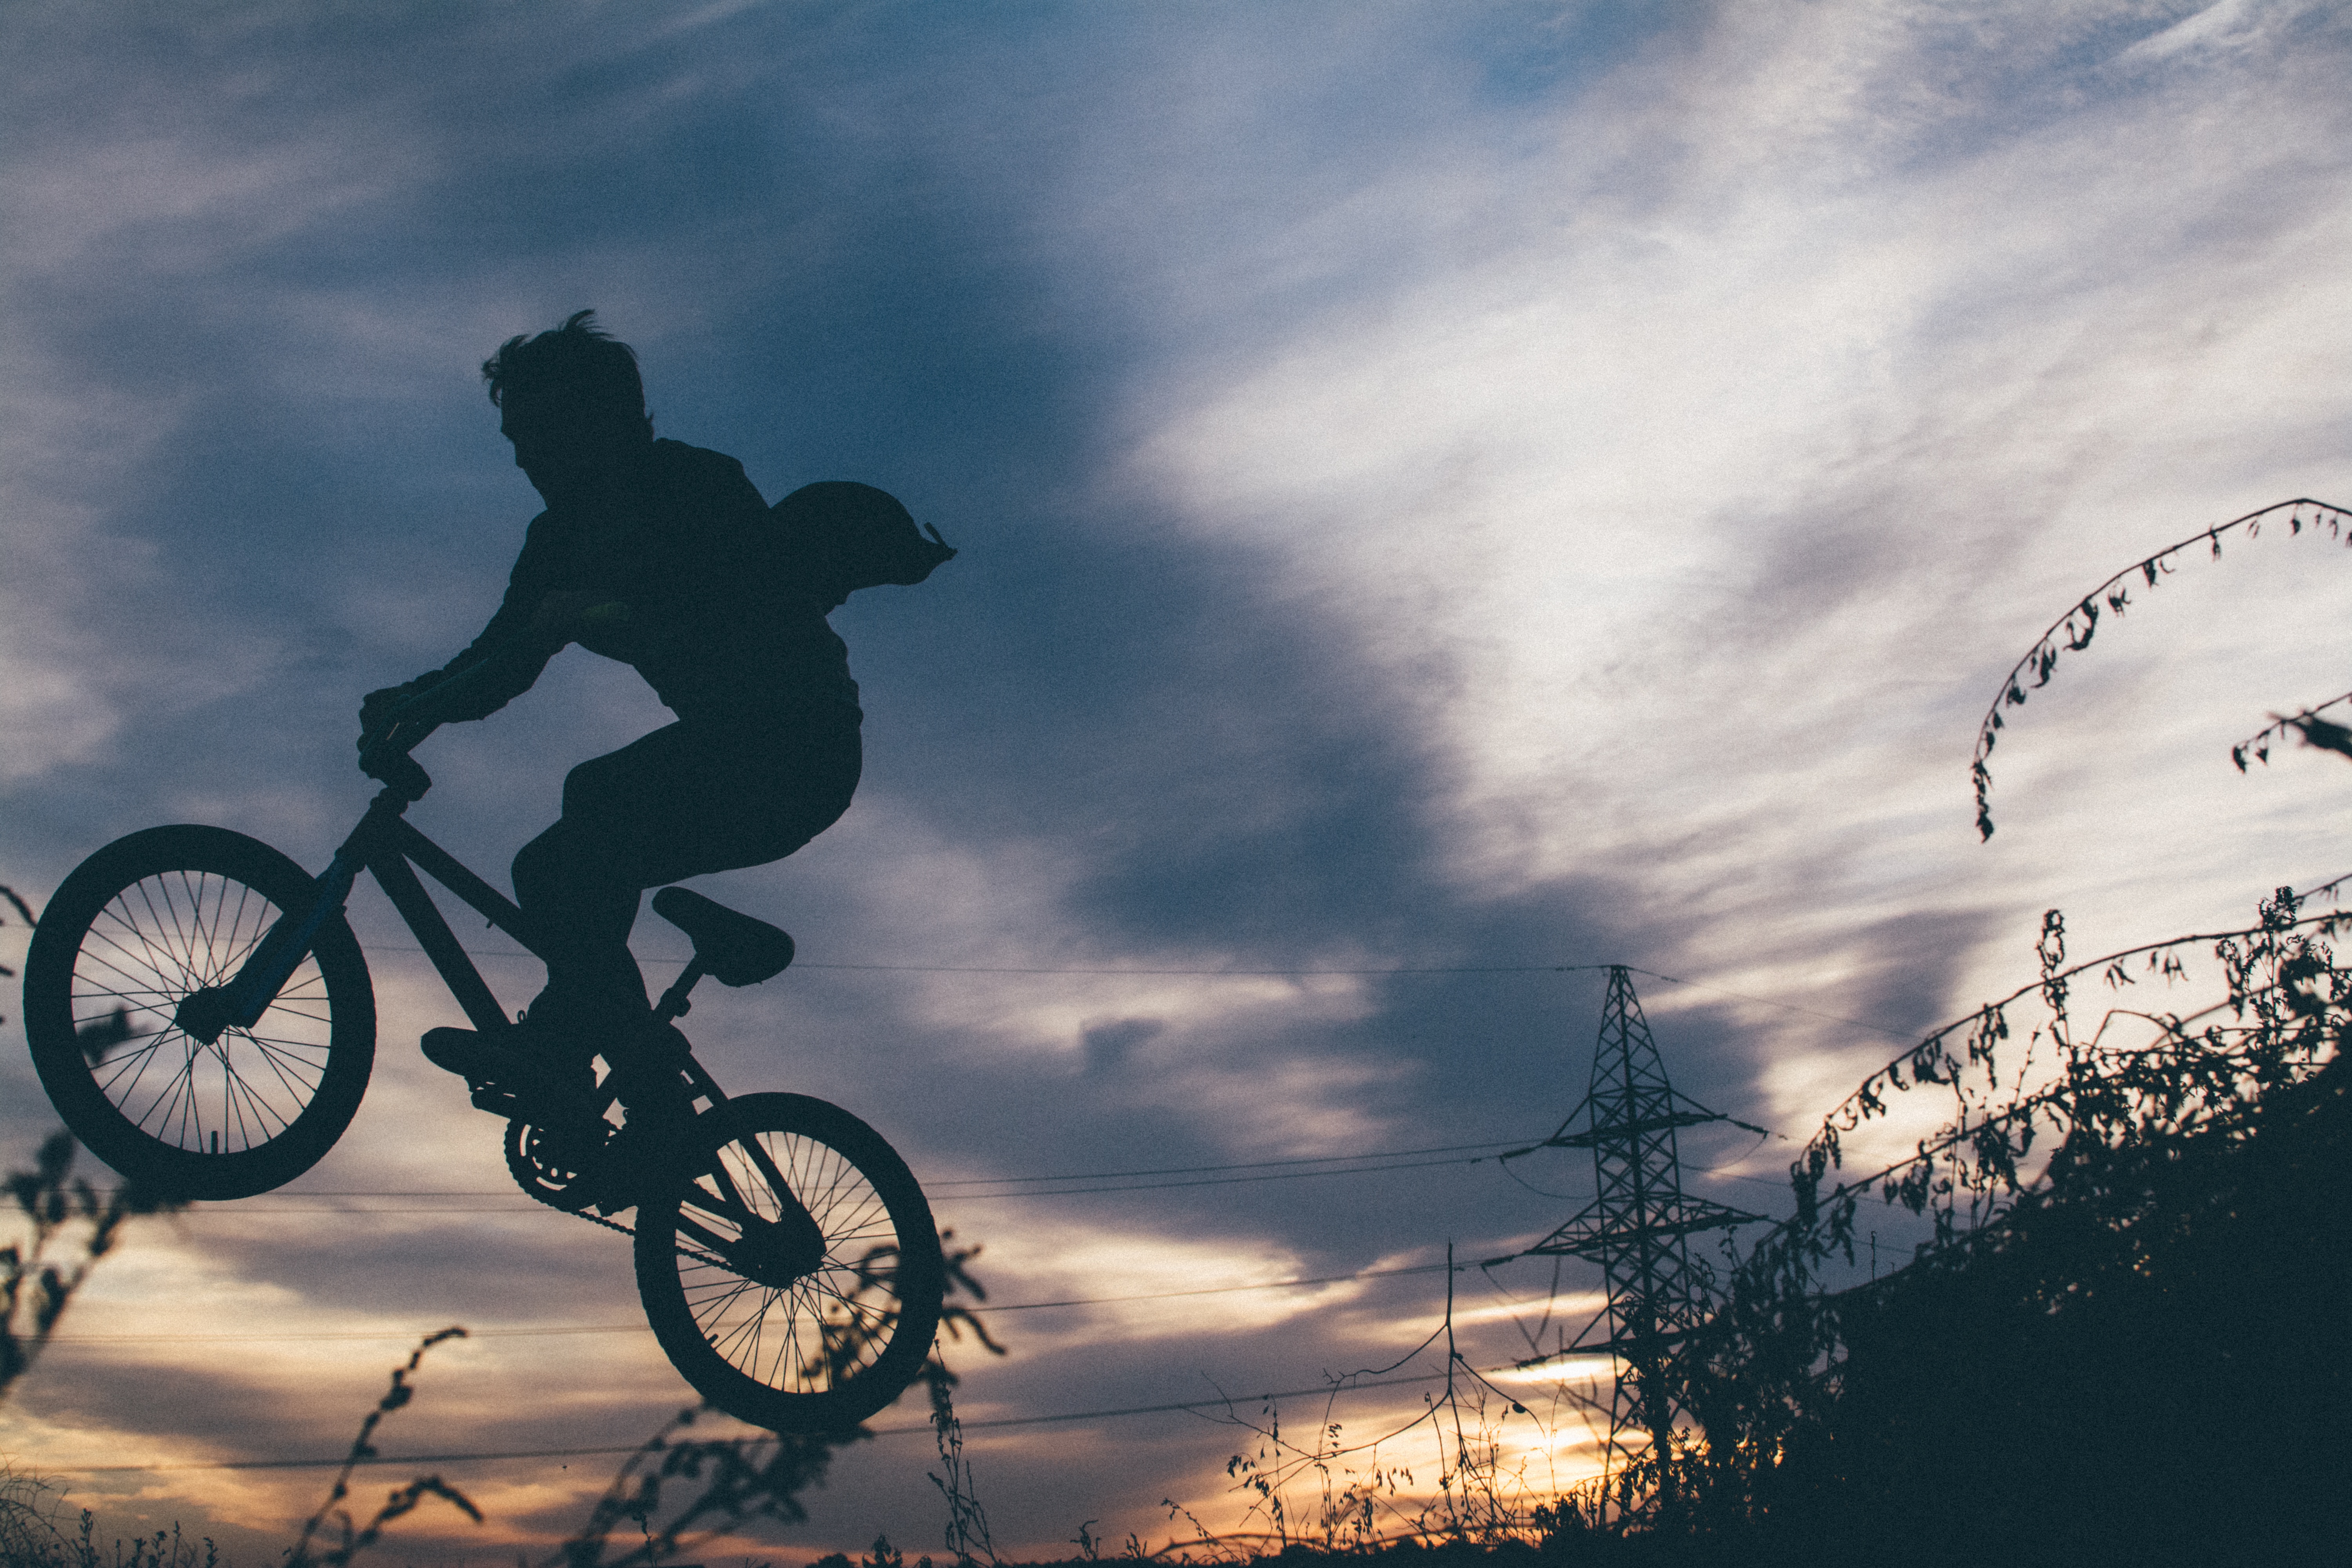 Бесплатное фото Силуэт мальчика на велосипеде на фоне неба